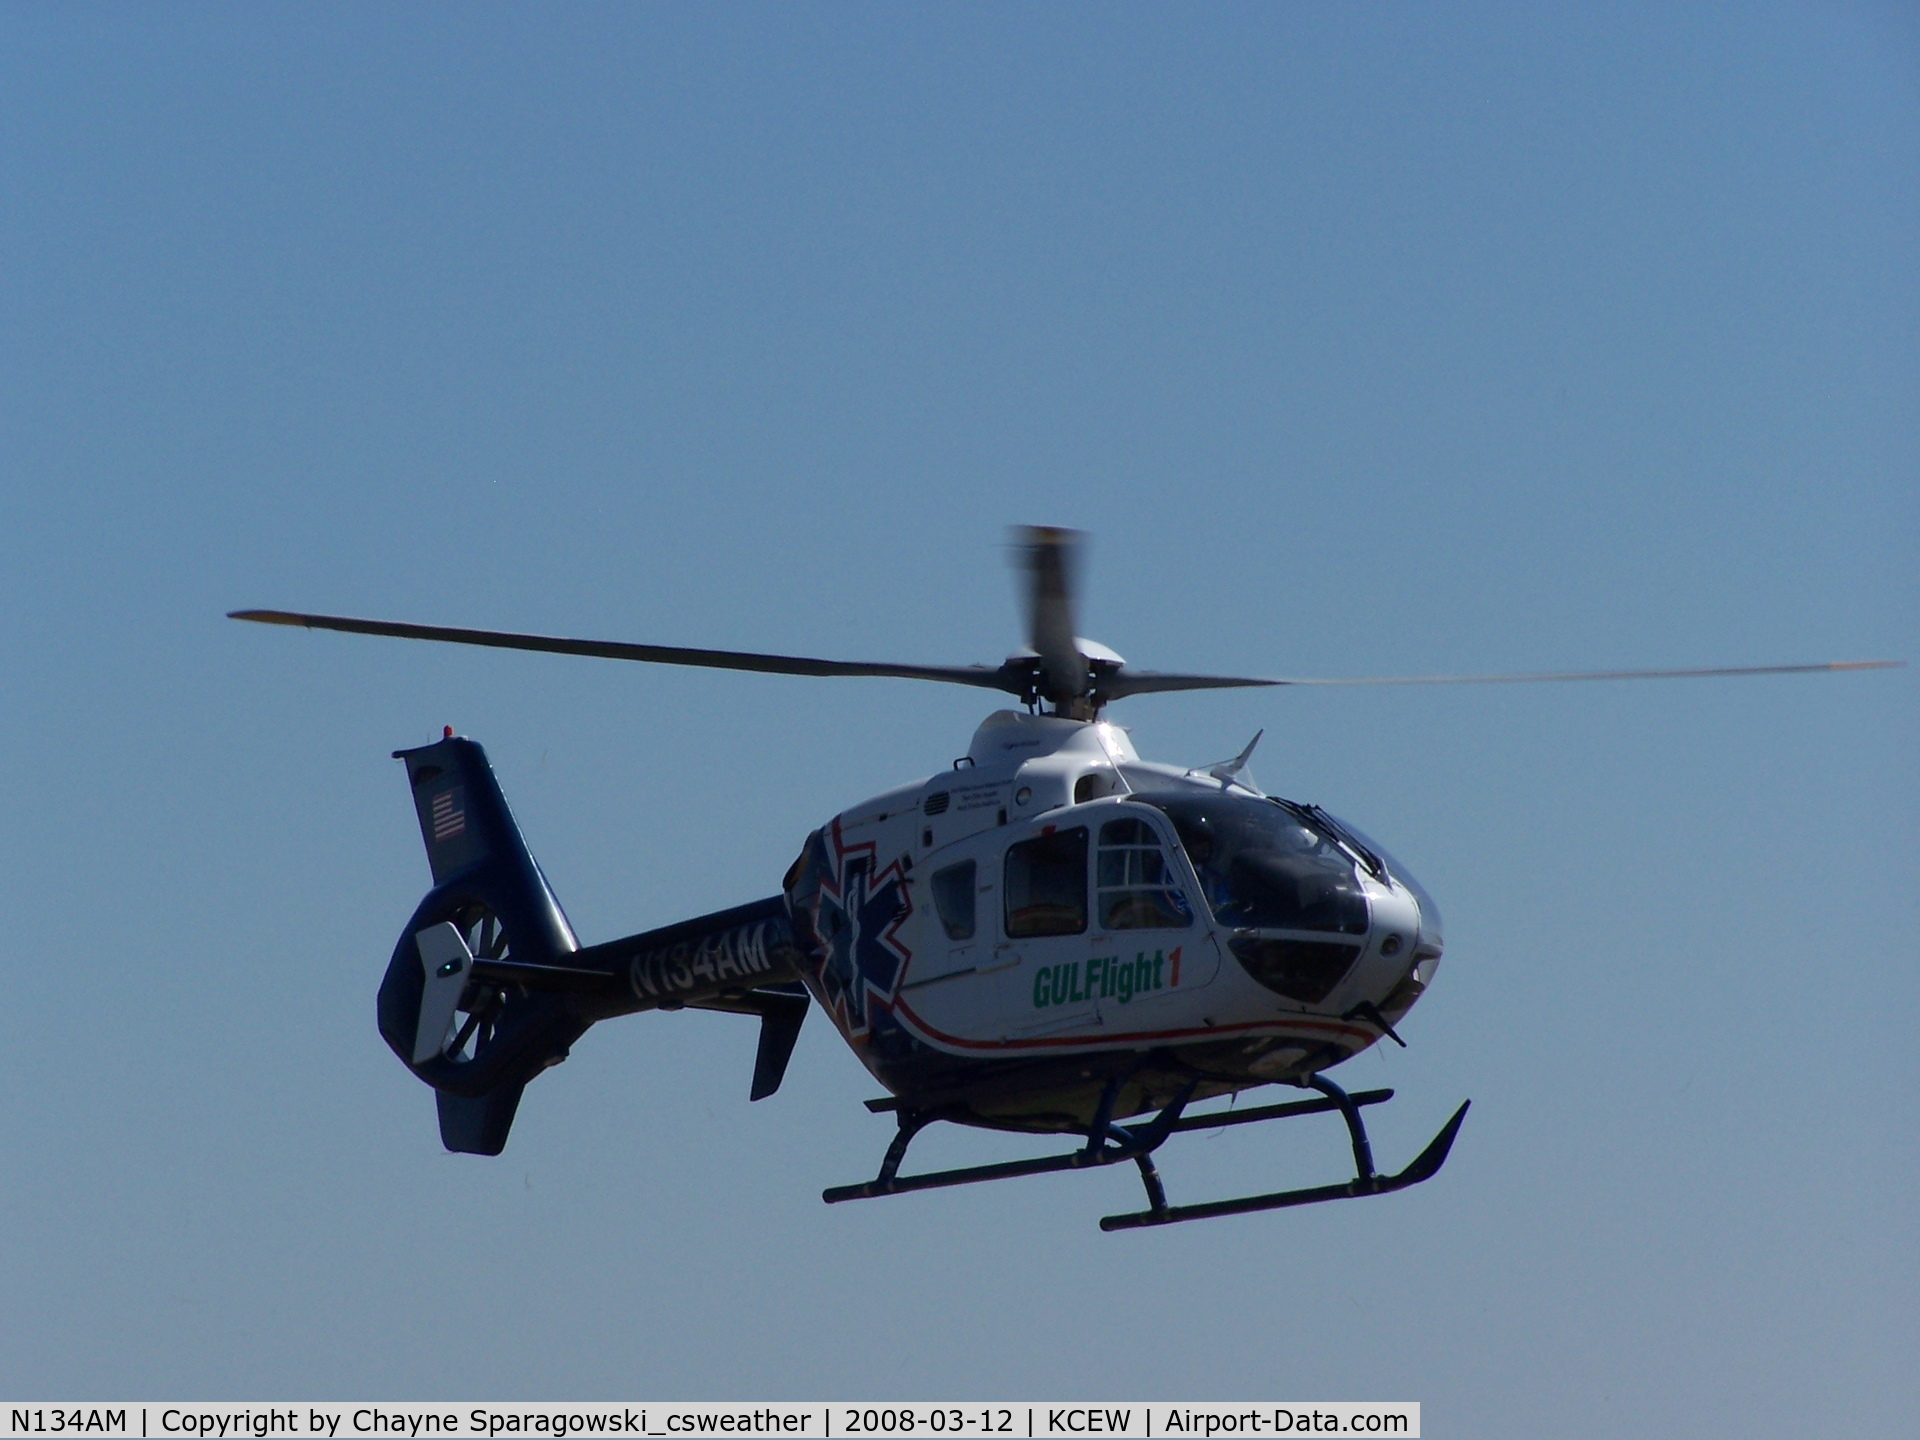 N134AM, 2004 Eurocopter EC-135P-2 C/N 0324, GulFlight1 landing